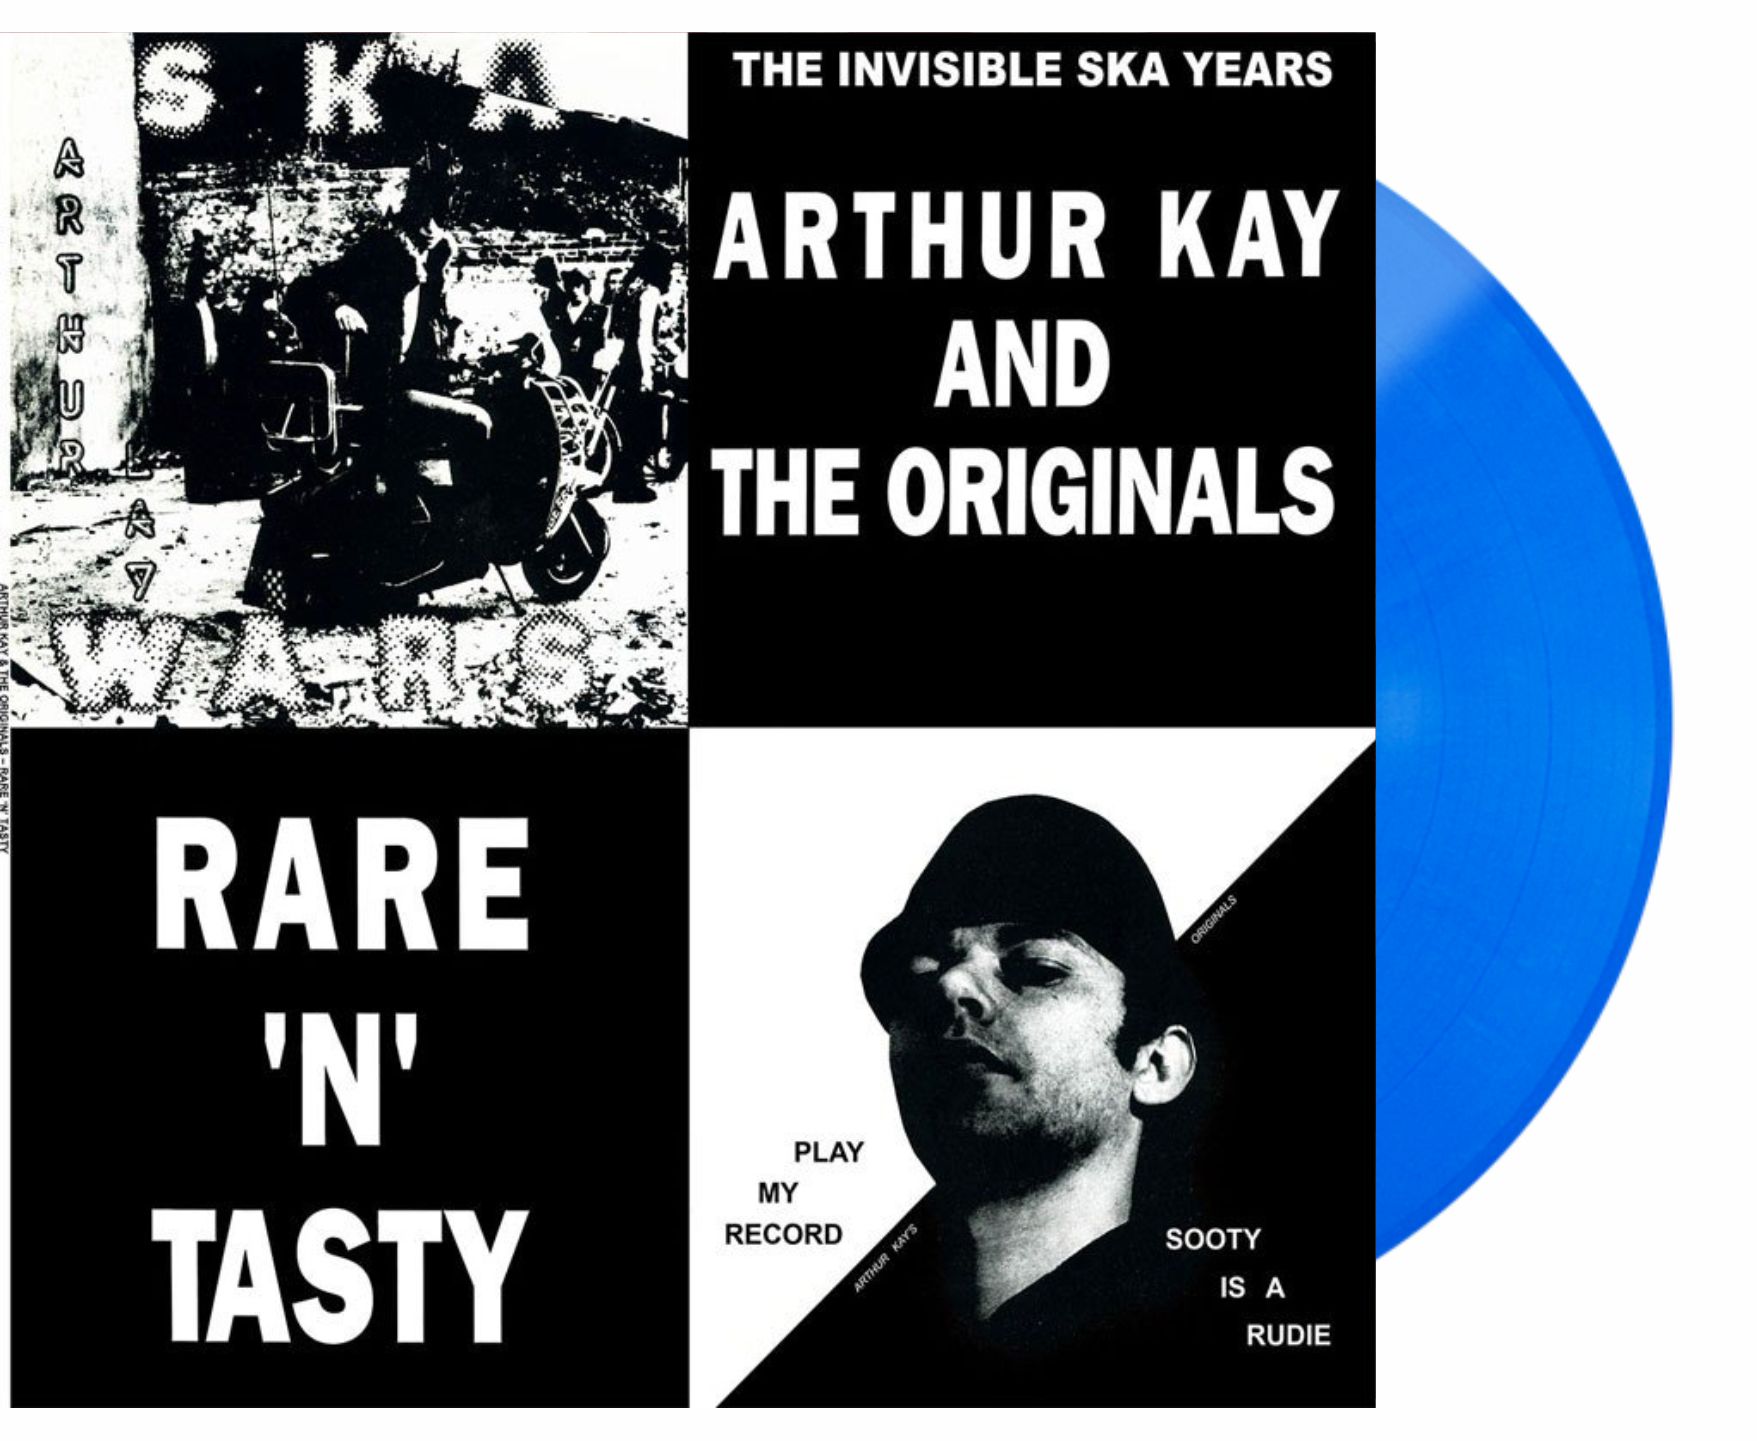 Arthur Kay and The Originals - Rare `n` tasty LP (blue)